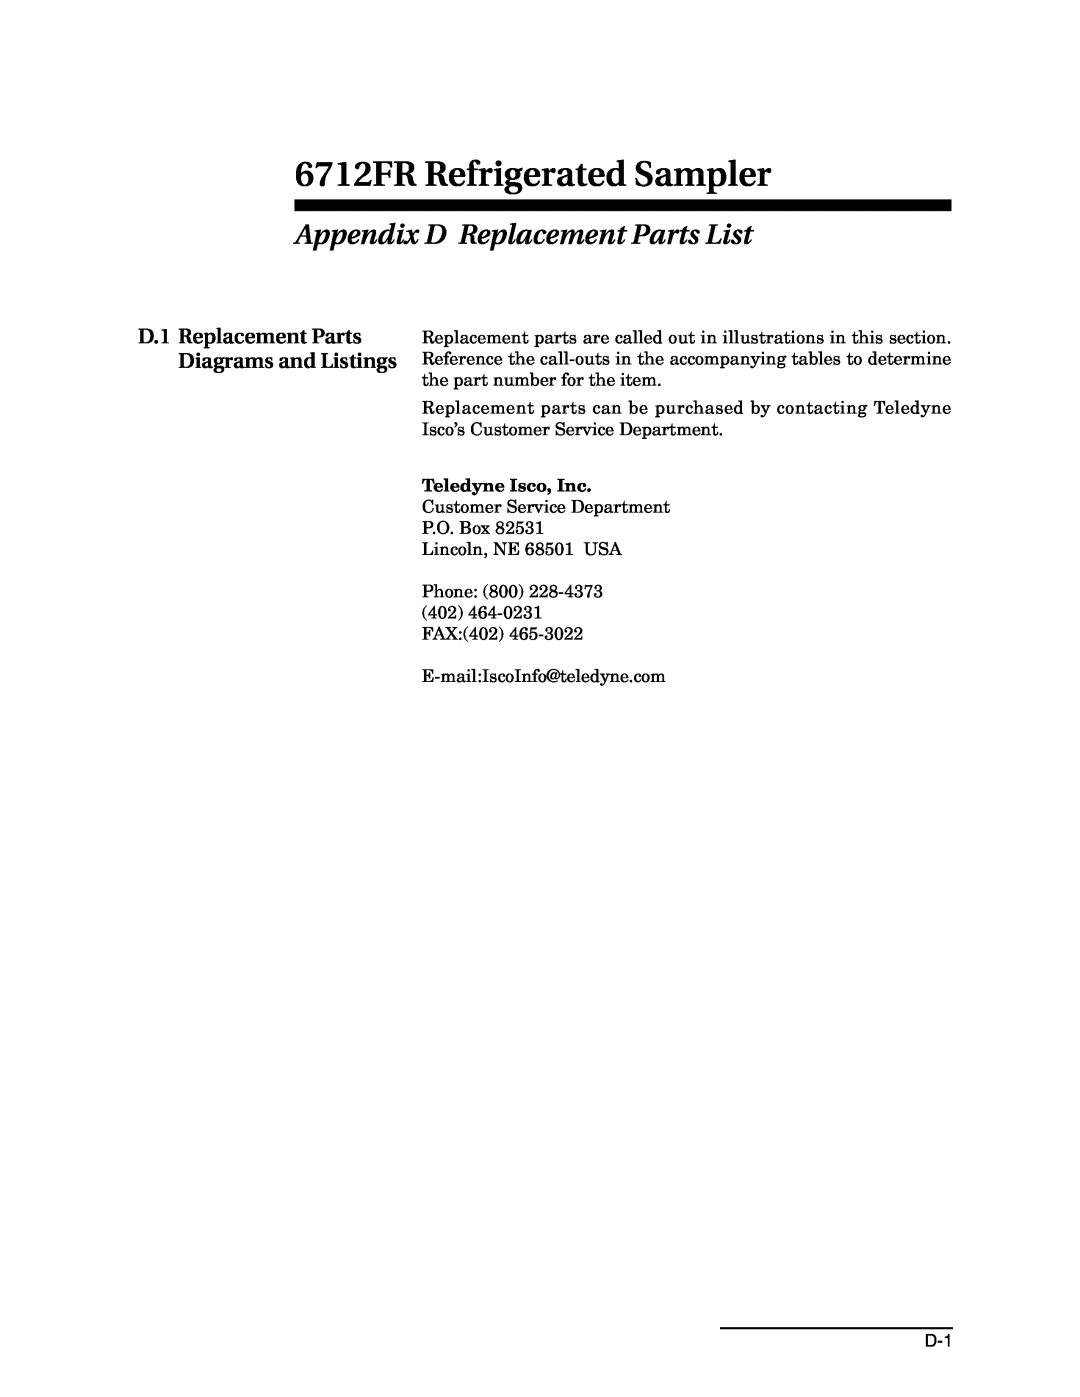 Teledyne 6712FR manual Appendix D Replacement Parts List, D.1 Replacement Parts Diagrams and Listings, Teledyne Isco, Inc 